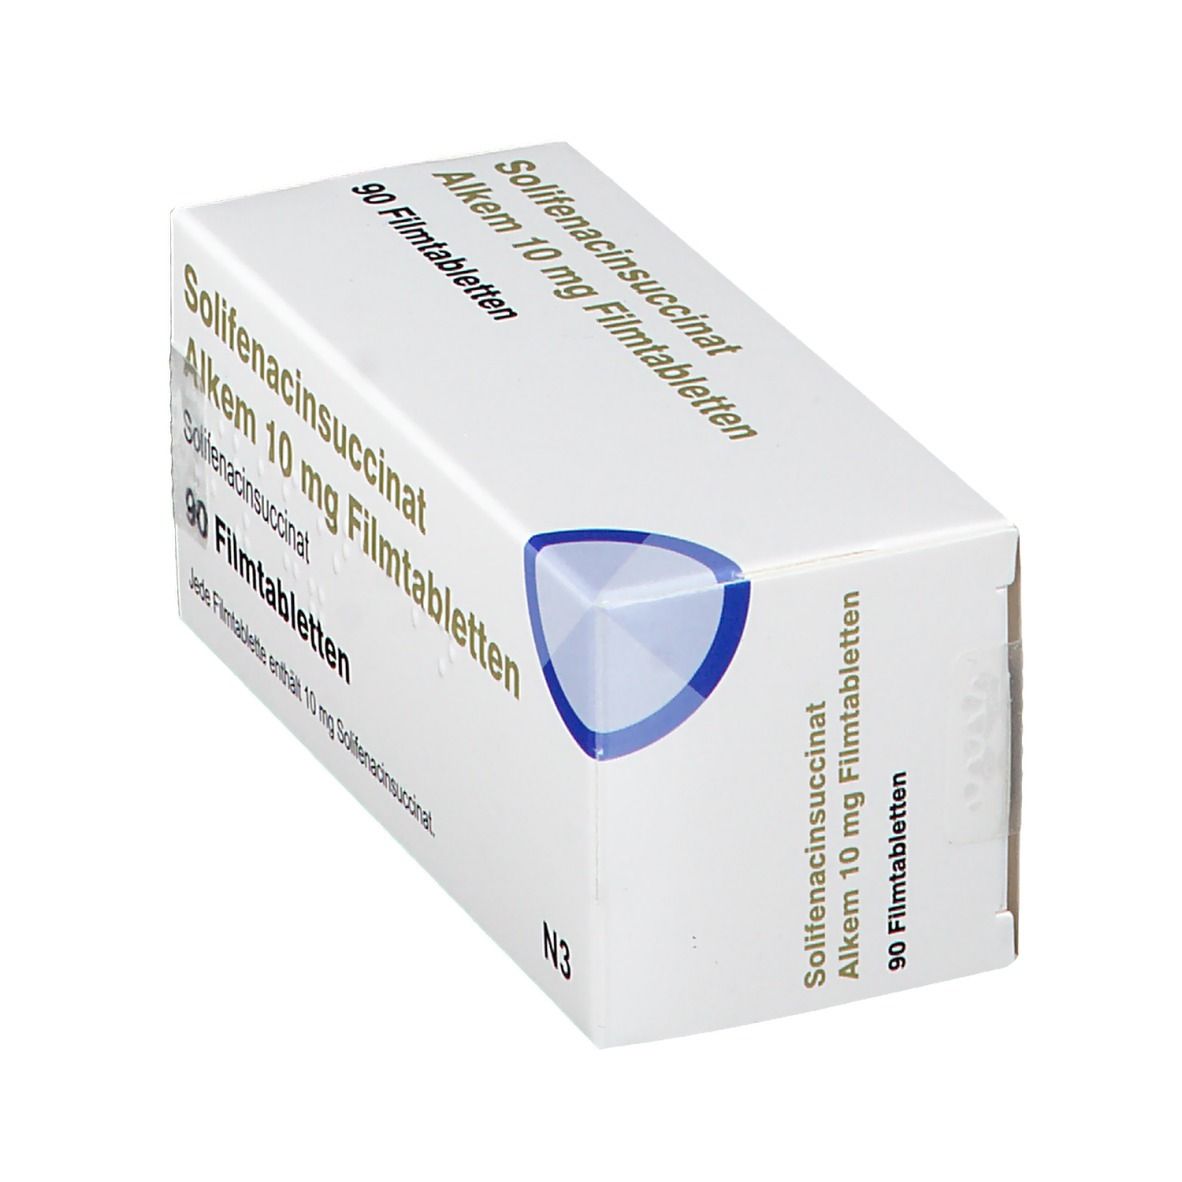 Solifenacinsuccinat Alkem 10 mg